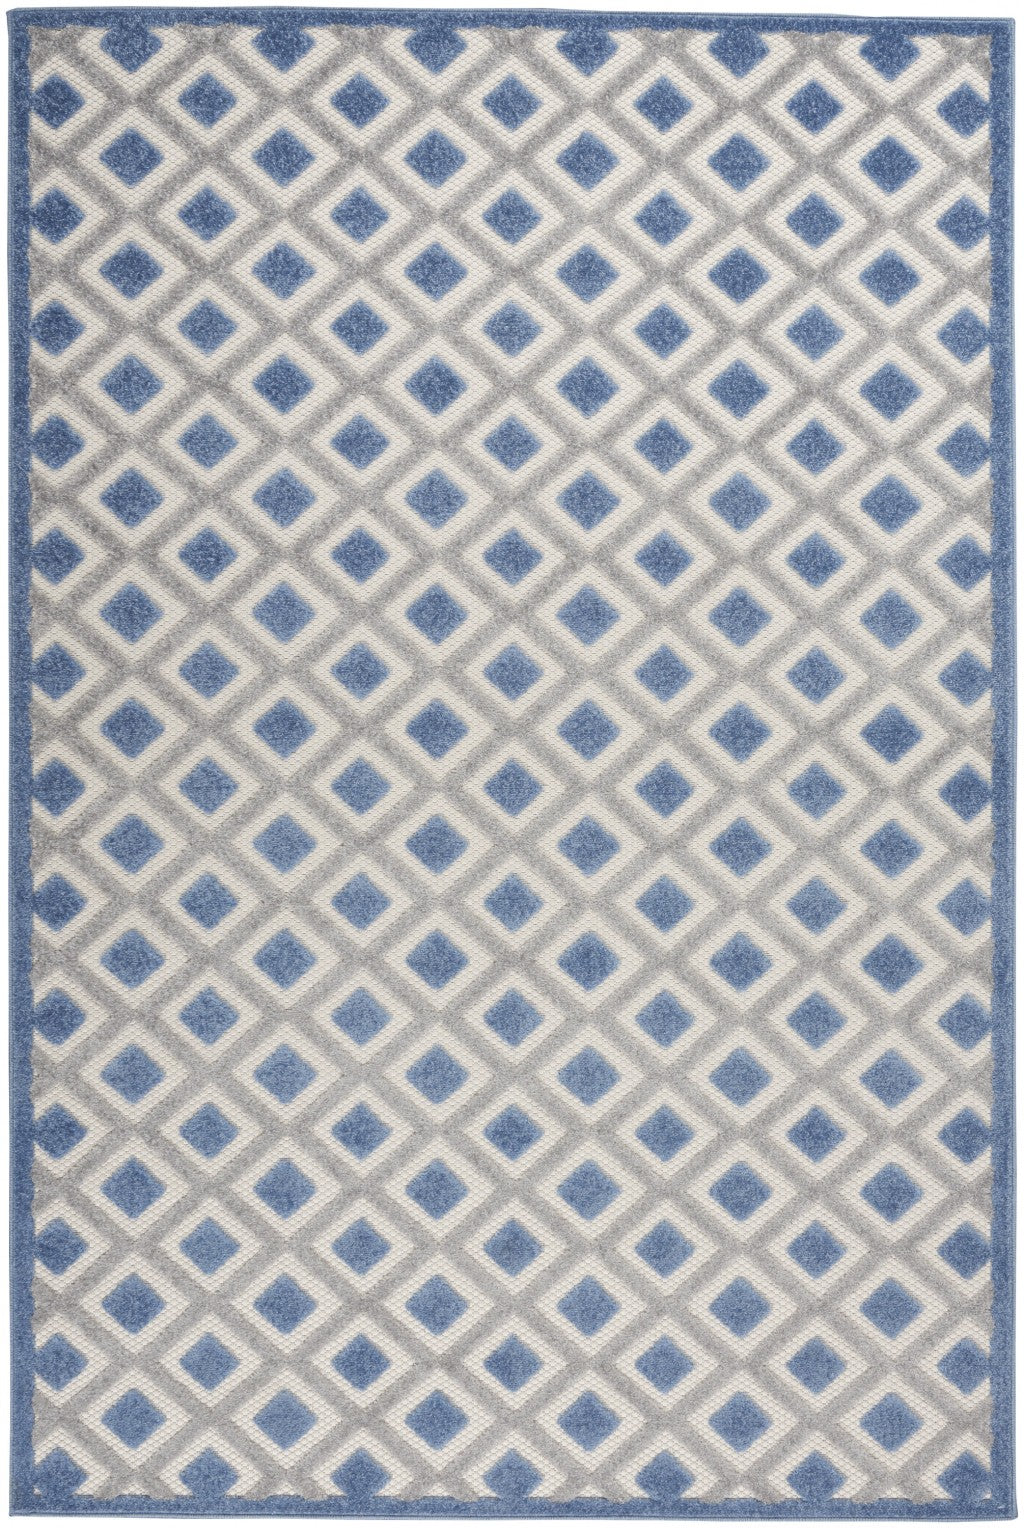 5’ x 8’ Blue and Gray Indoor Outdoor Area Rug